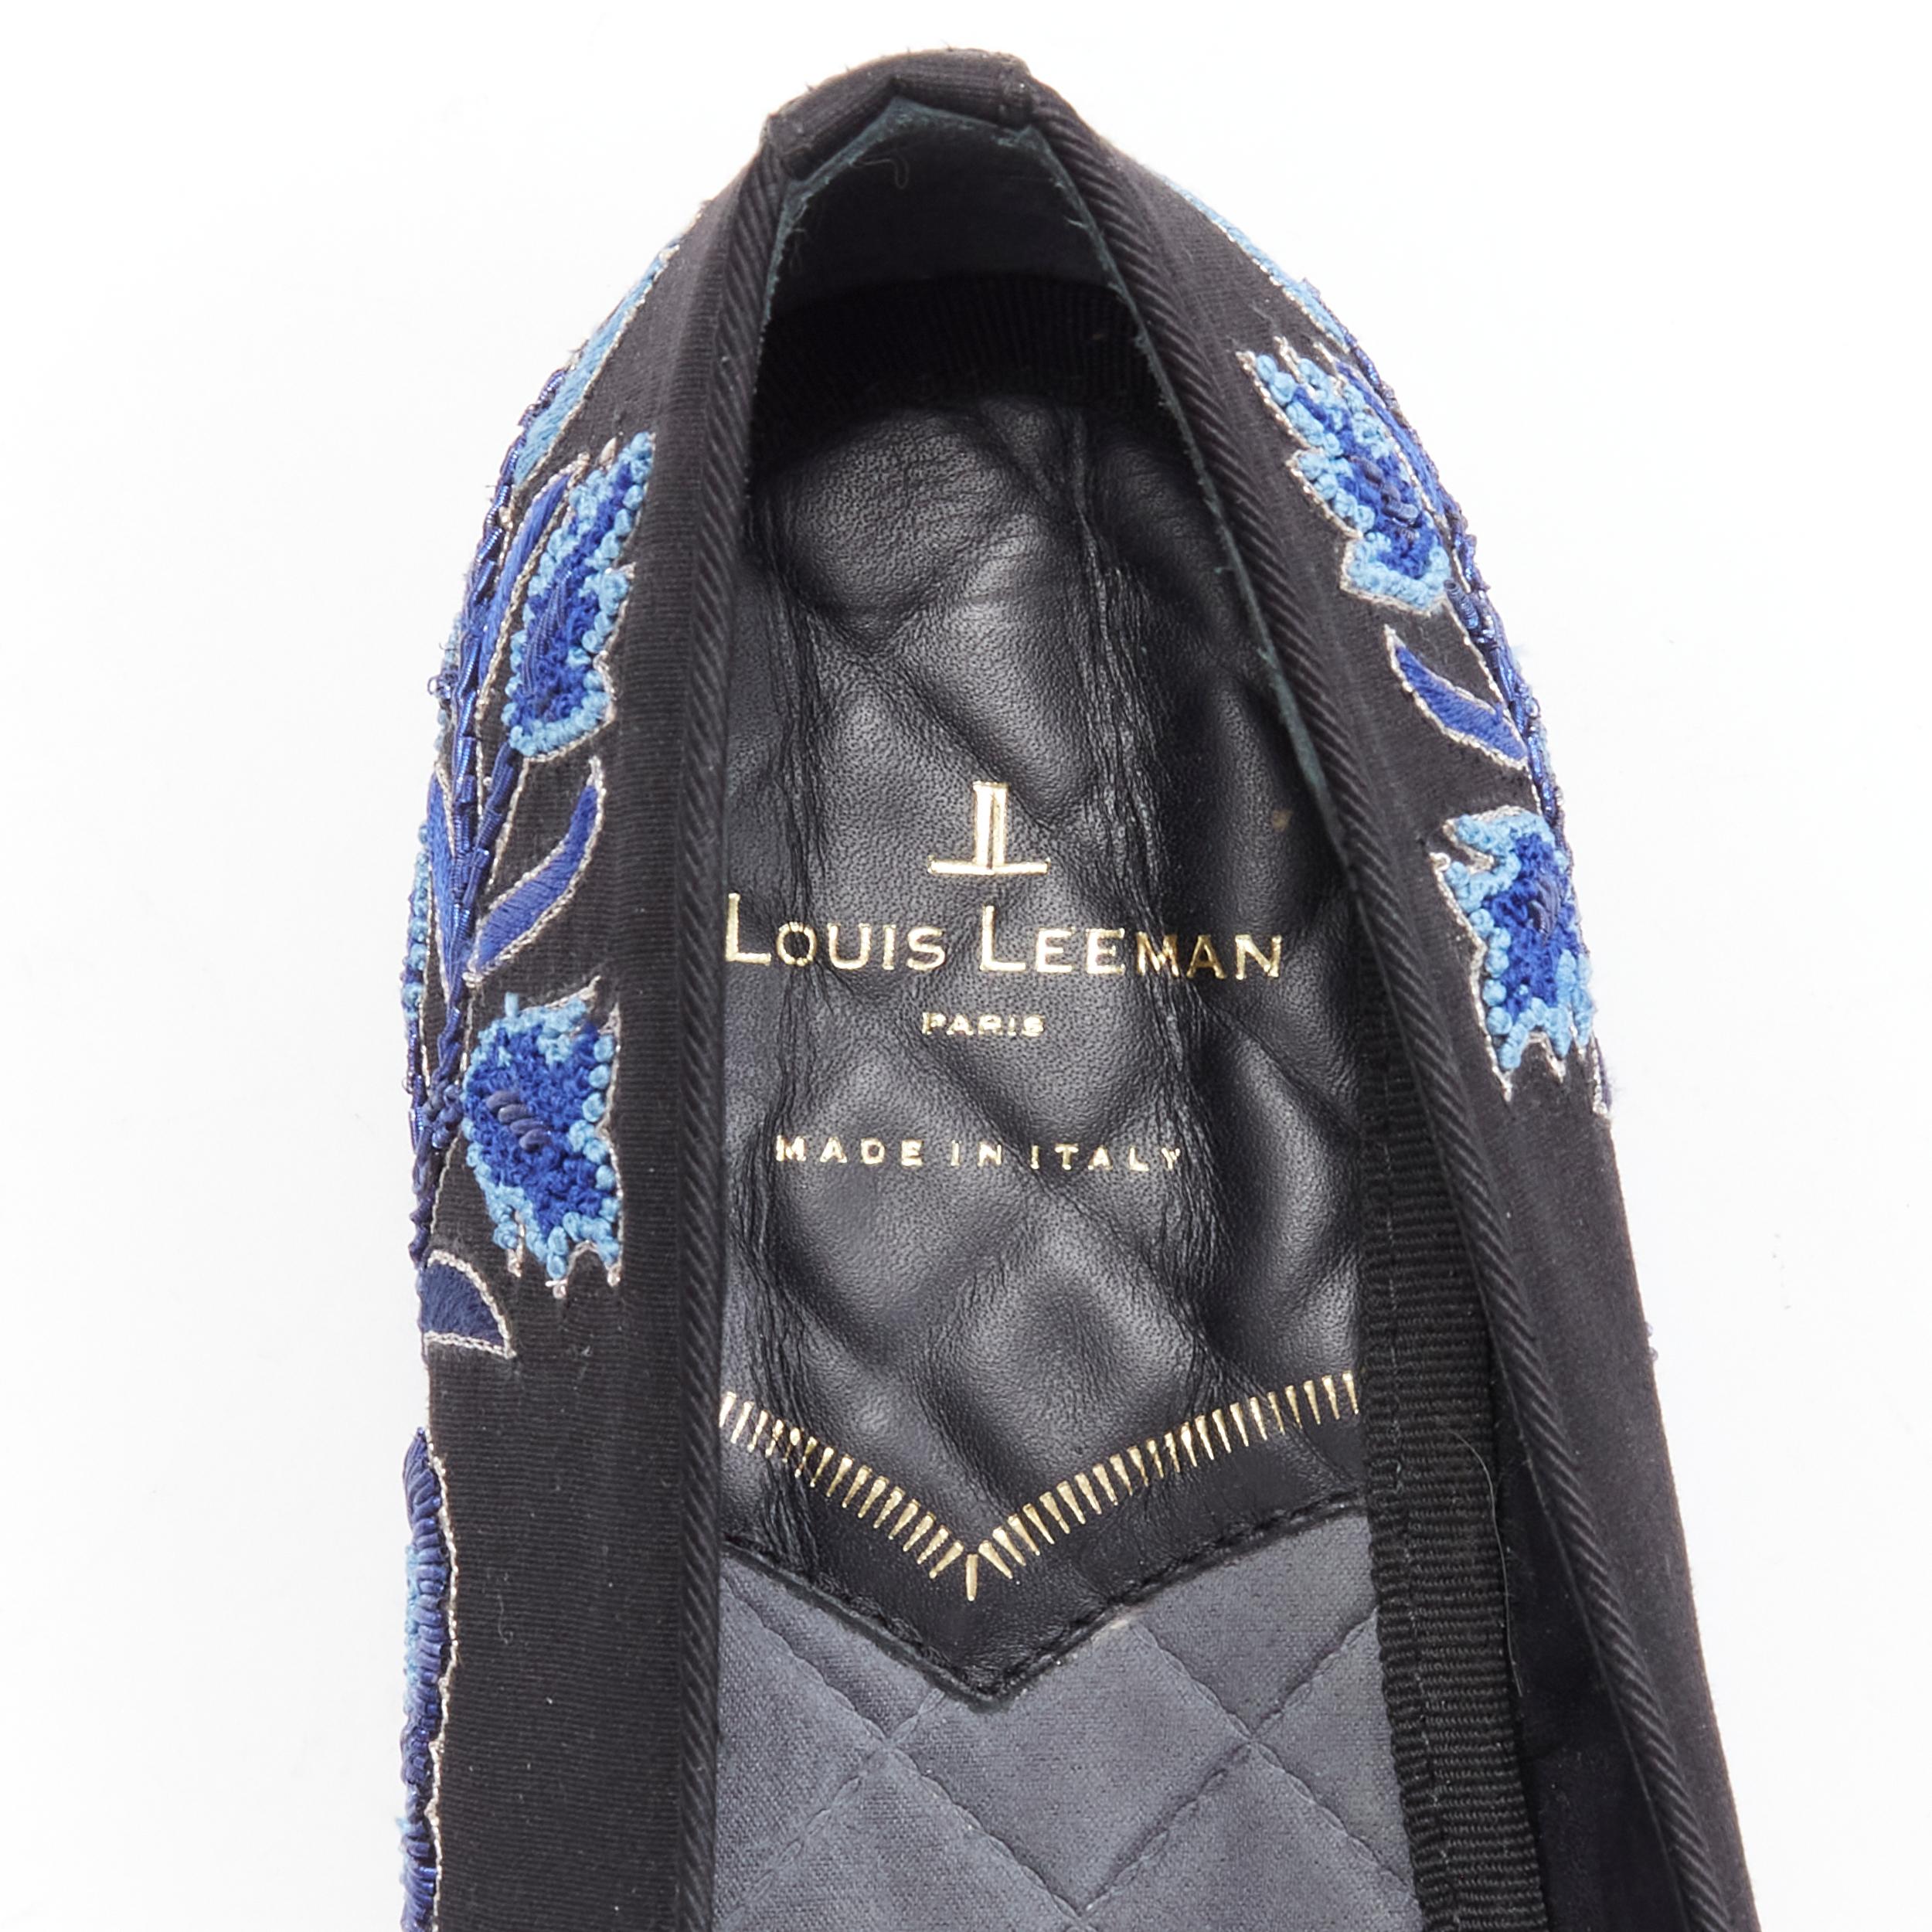 LOUIS LEEMAN black satin blue floral embroidery evening loafer EU42 US9 For Sale 6